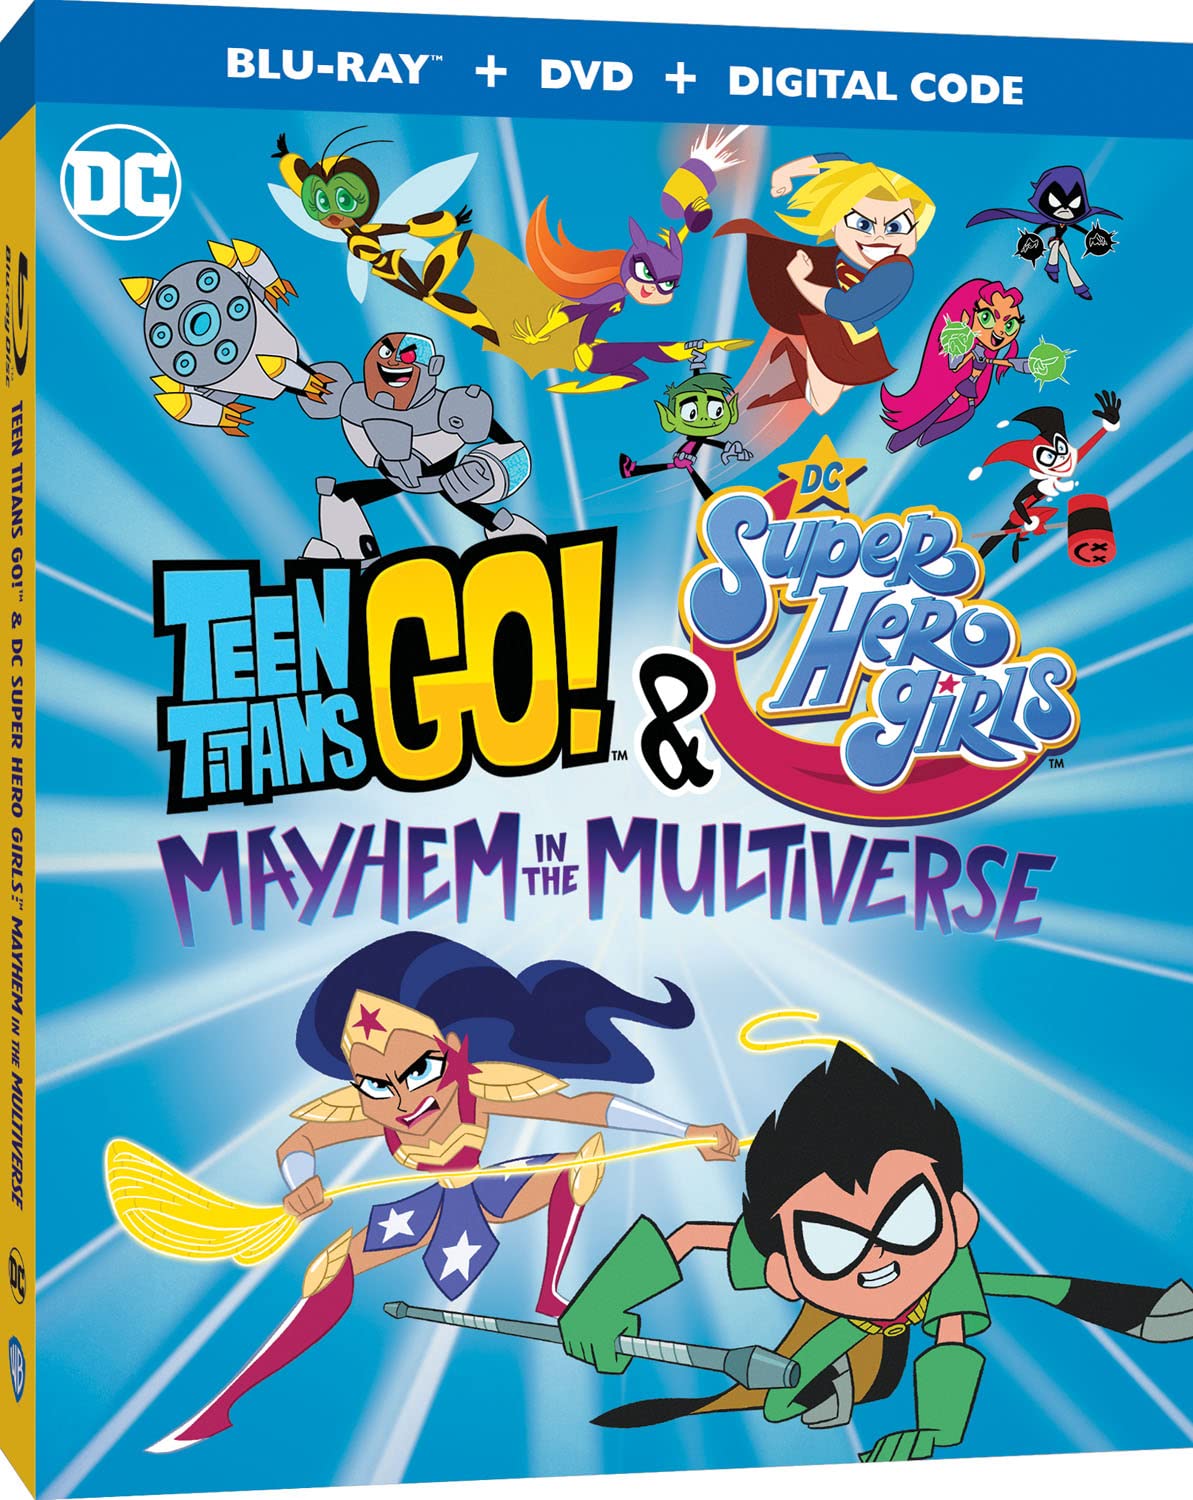 Teen Titans Go! & DC Superhero Girls: Mayhem In The Multiverse - Darkside Records